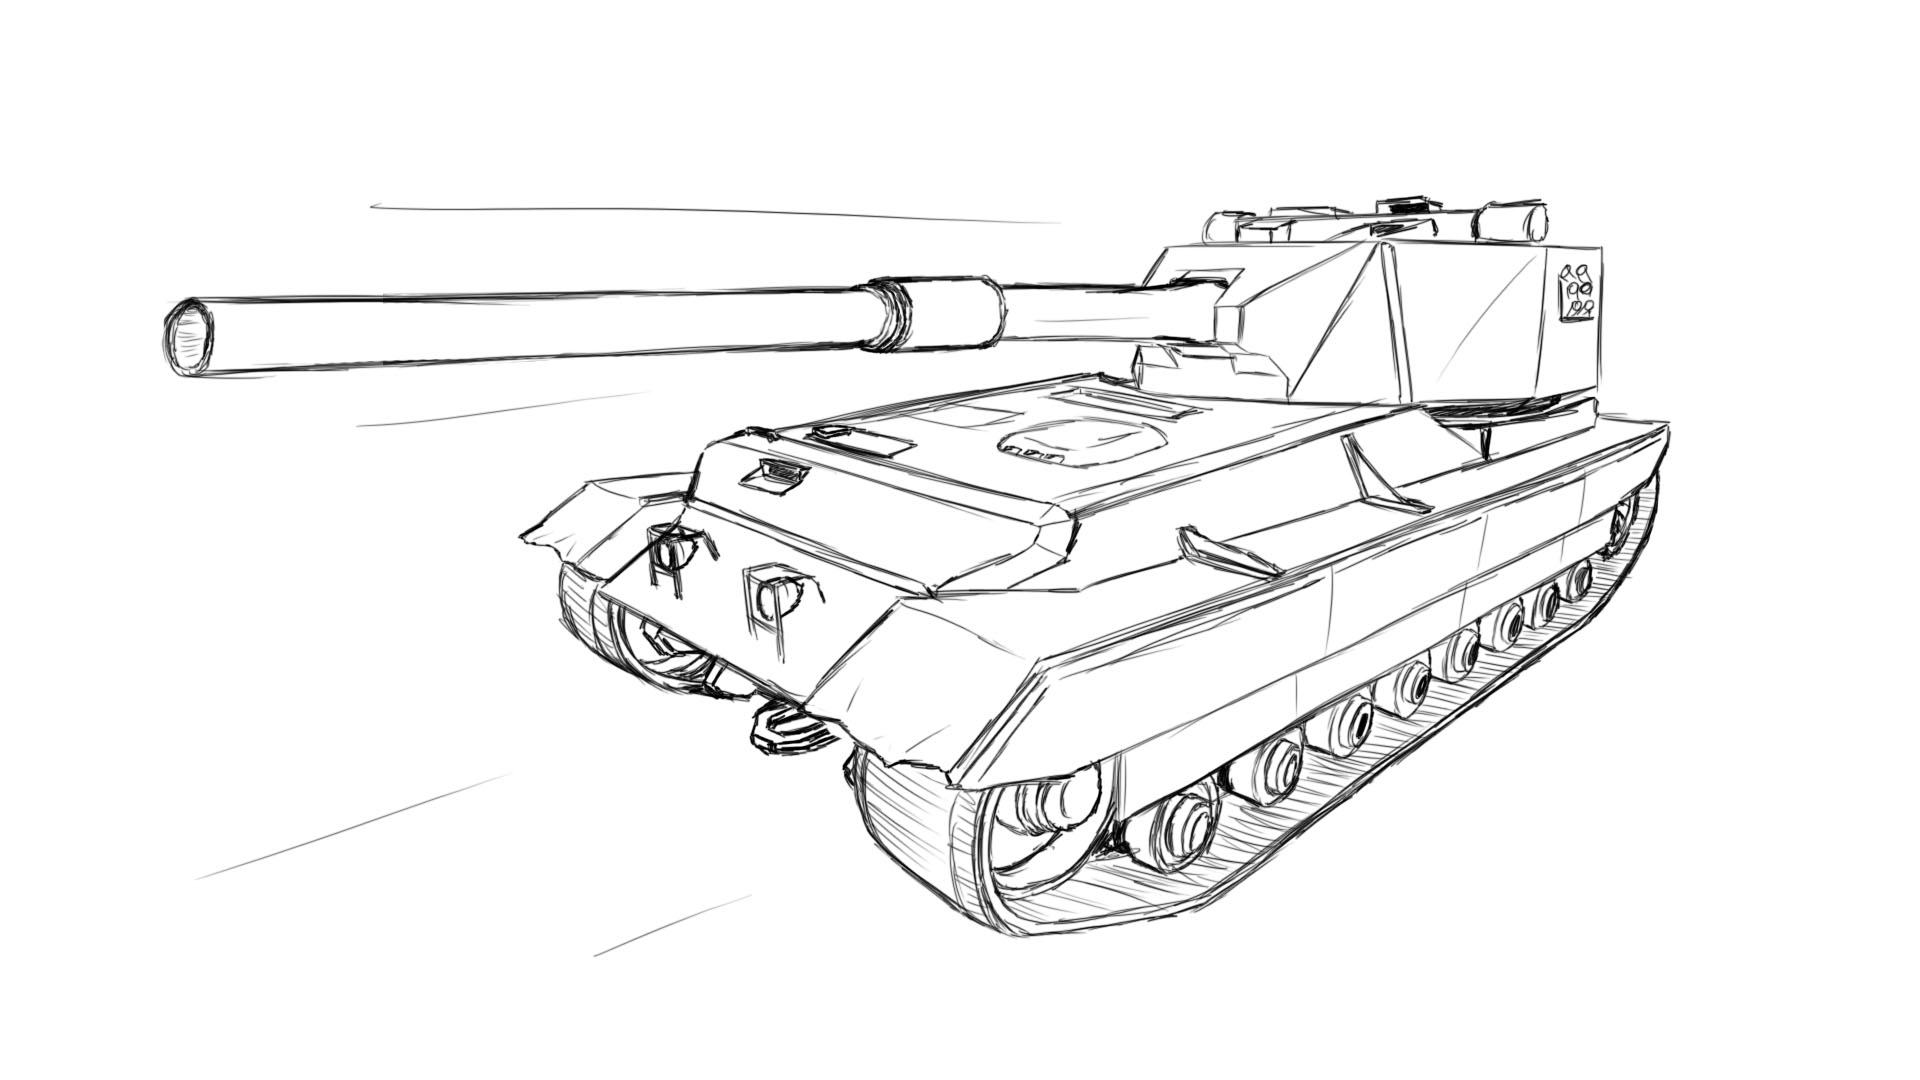 Раскраски танки из World of Tanks Blitz